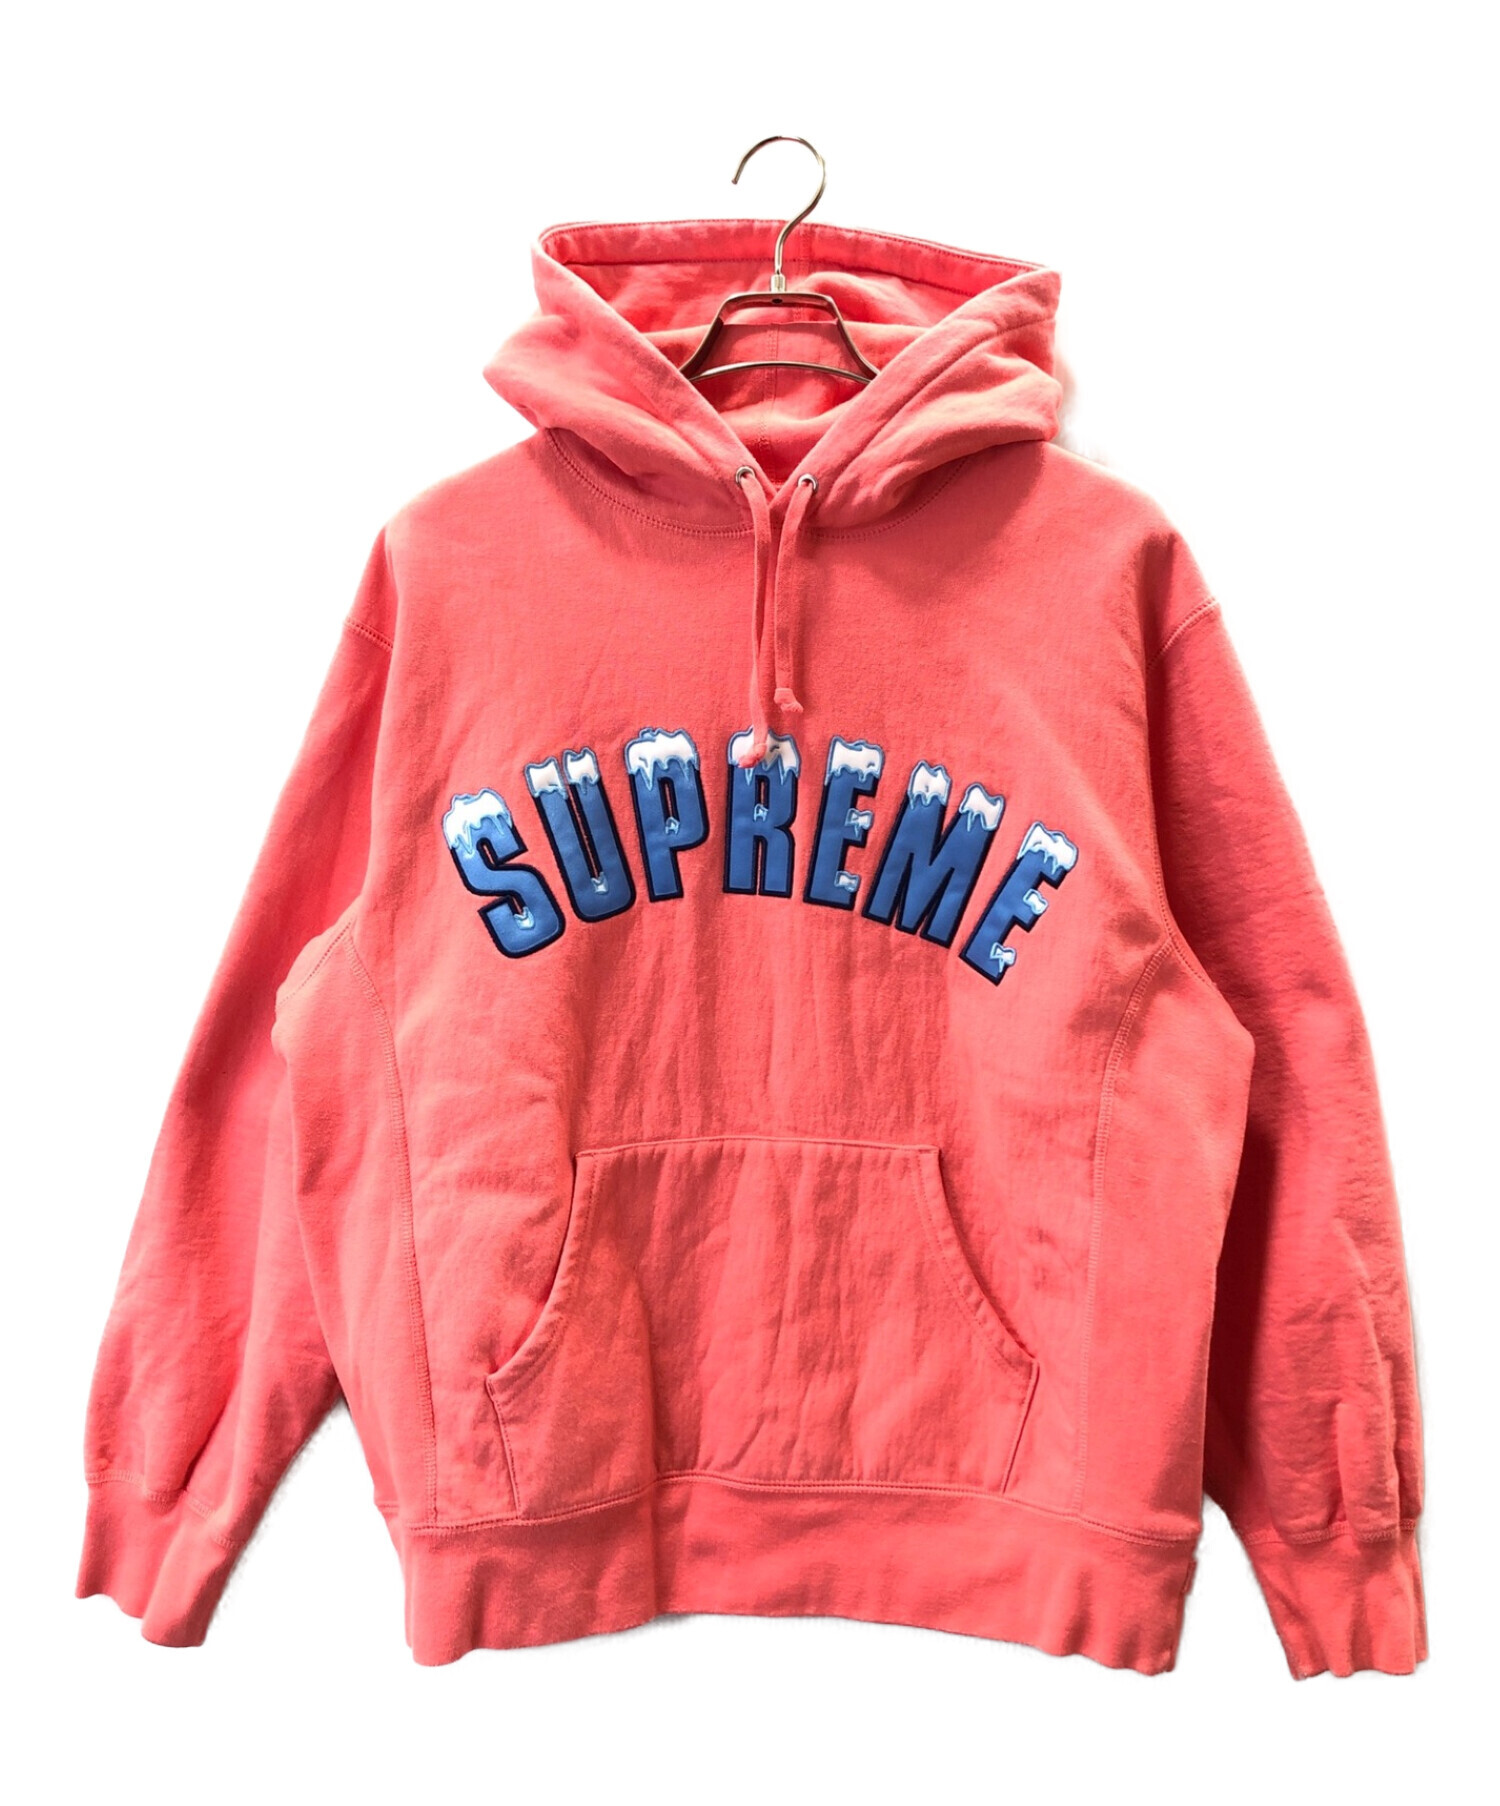 【S】Supreme Icy Arc Hooded Sweatshirt ピンク